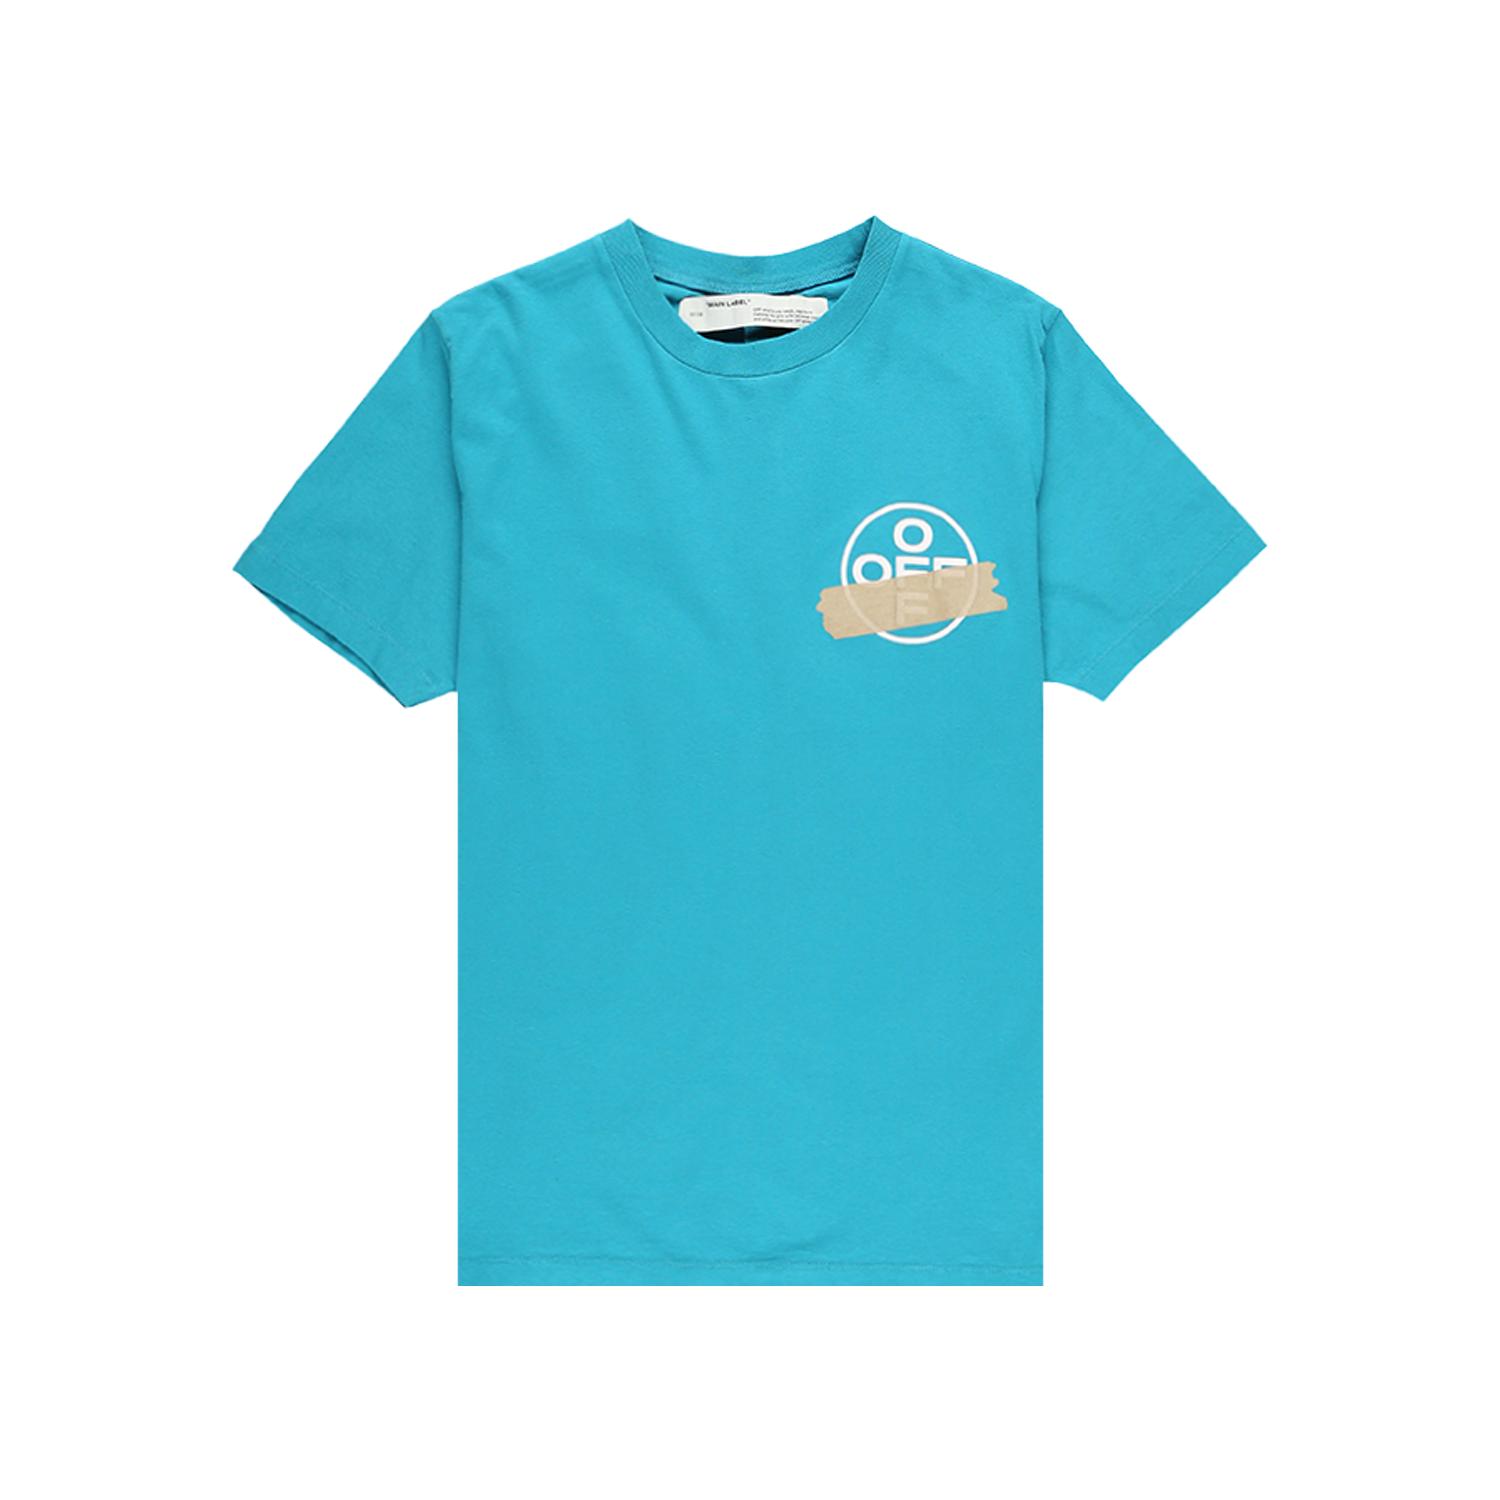 NWT OFF-WHITE C/O VIRGIL ABLOH Blue Graffiti Pupp Skate T-shirt Size XXL  $1480